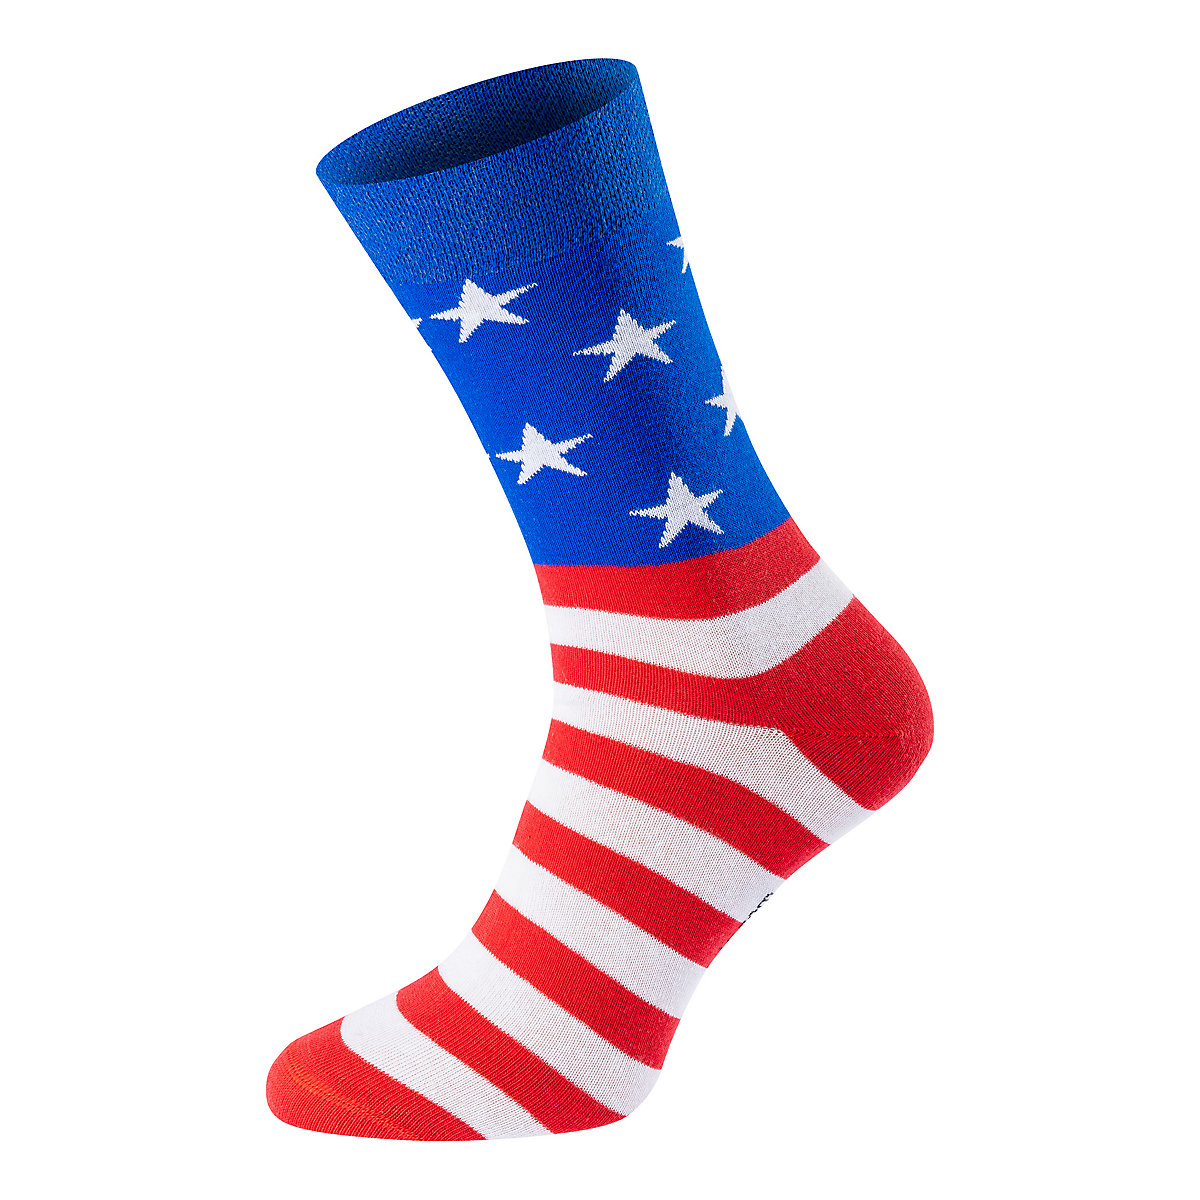 ChiliLifestyle Freizeitsocken Banderole Leisure Socks Socken mehrfarbig